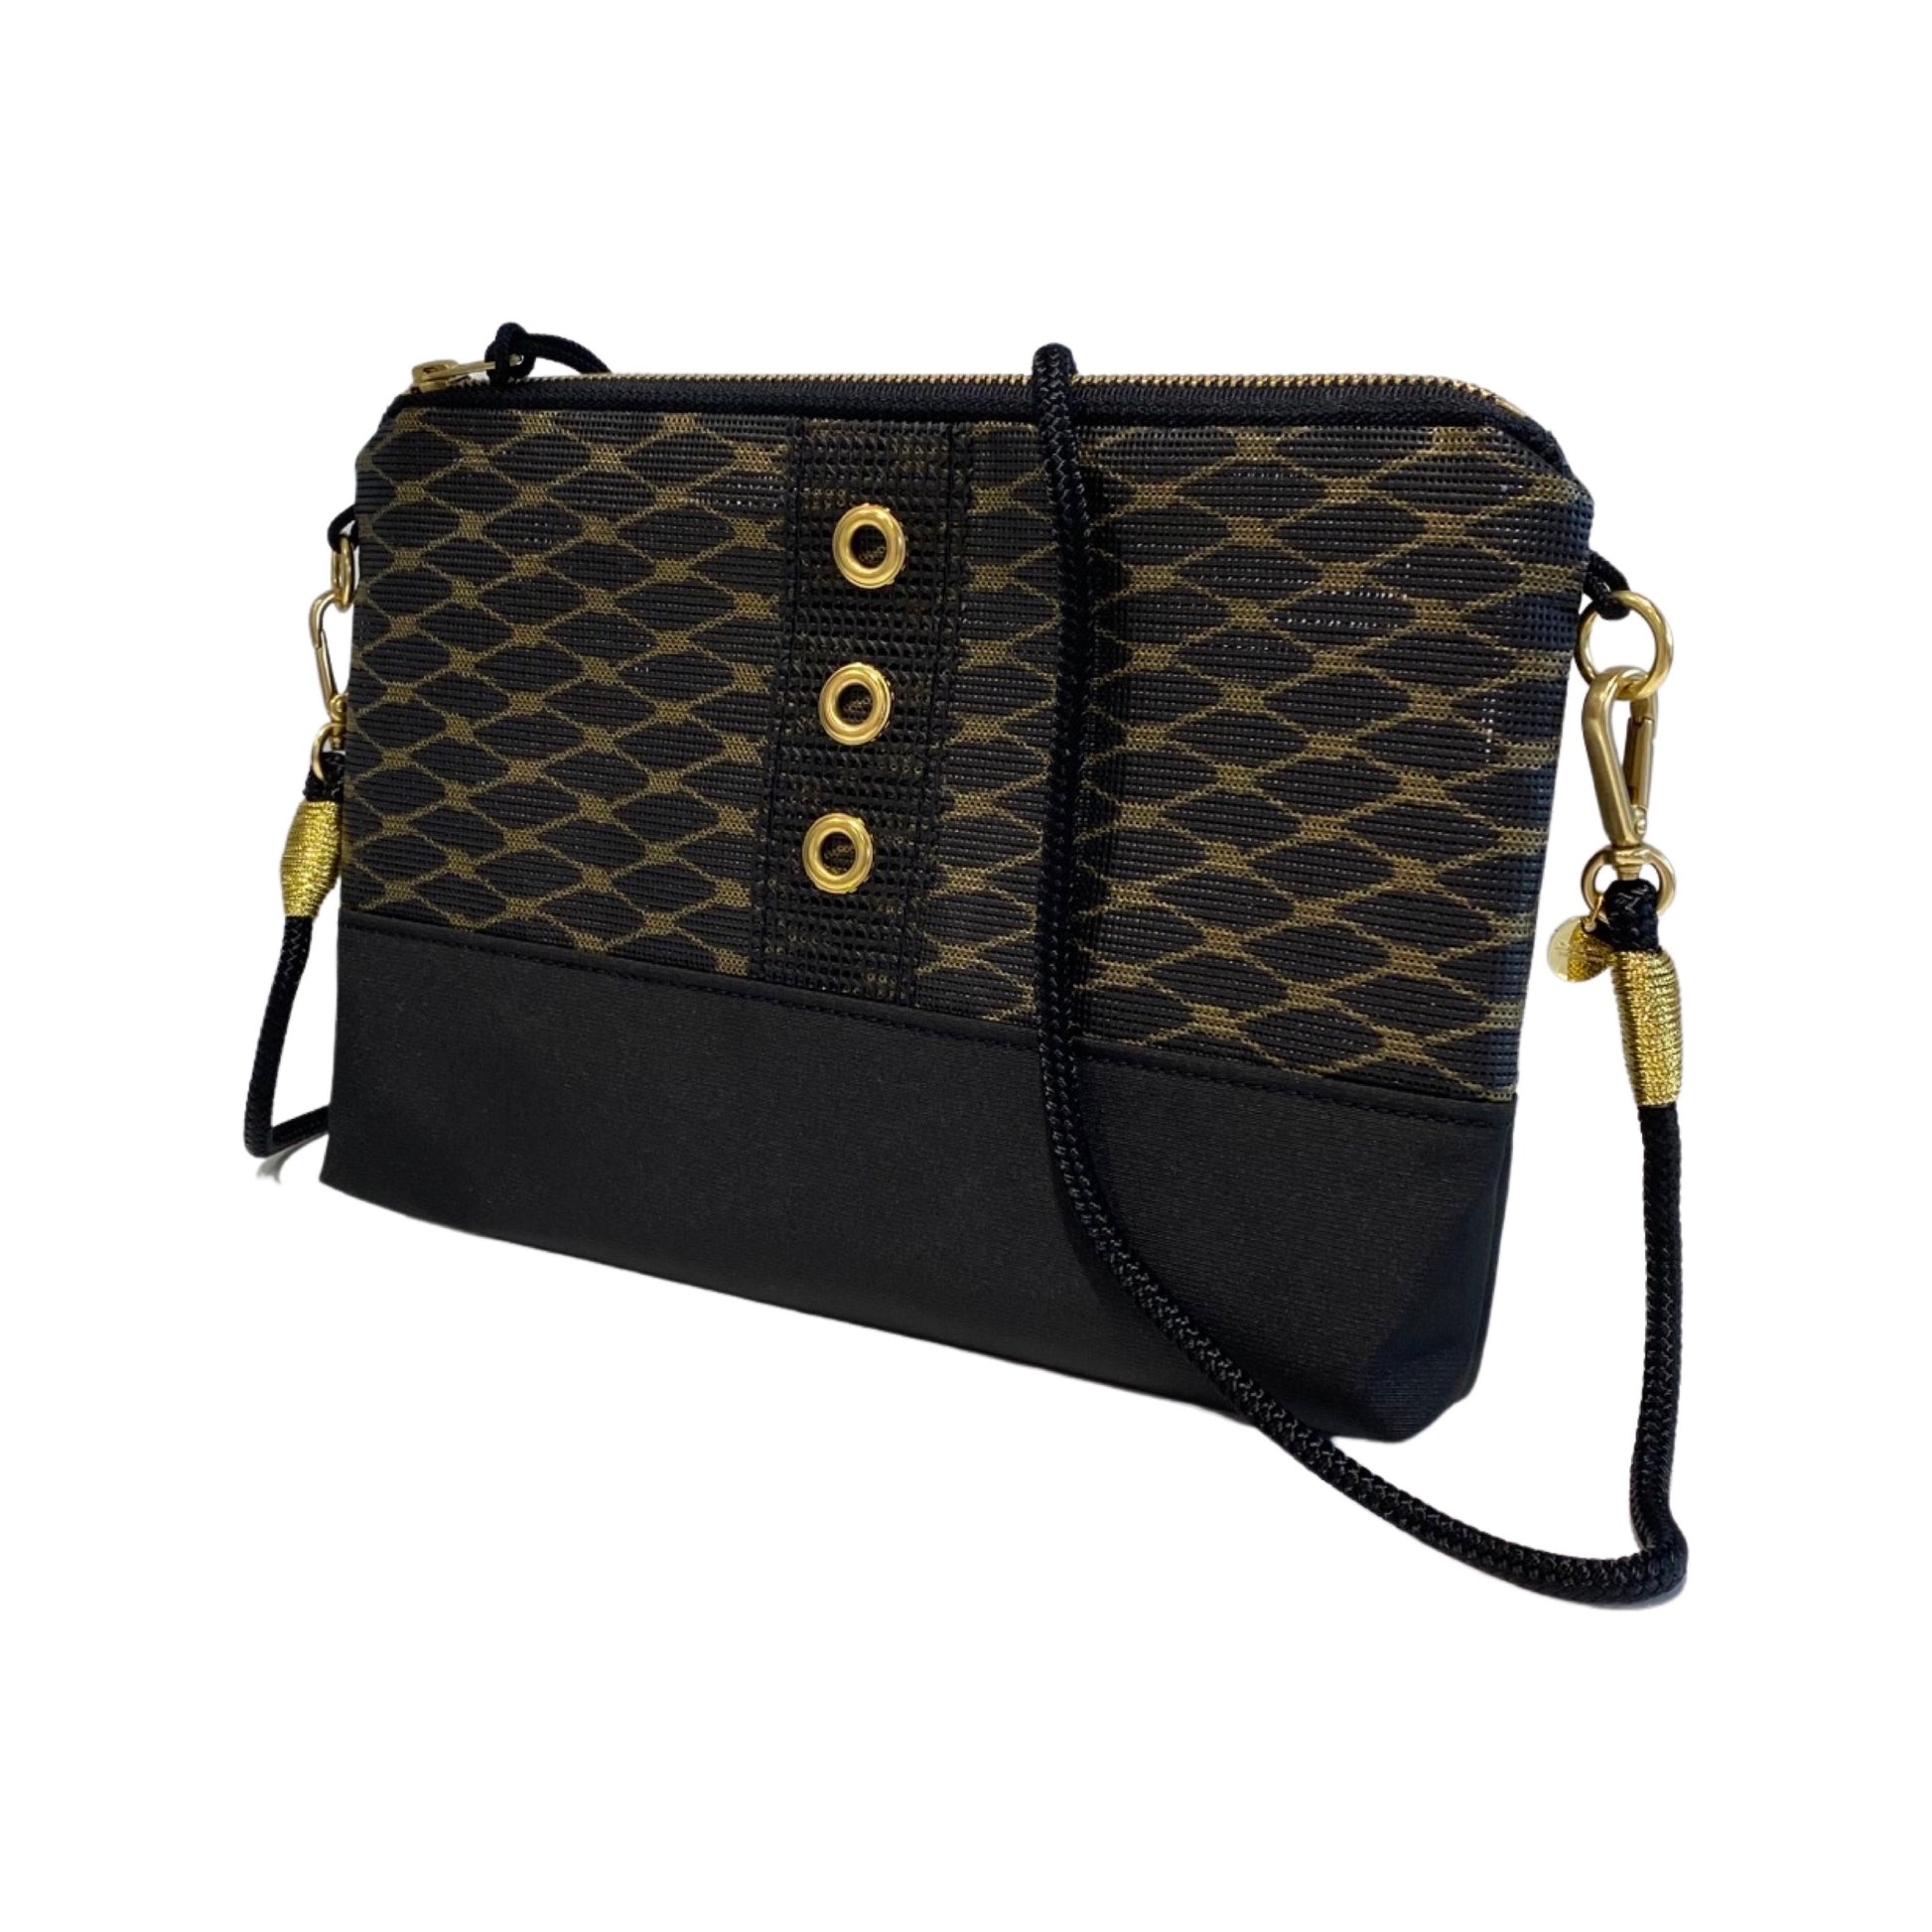 Marina Shoulder Bag in Metallic Gold Chart – Alaina Marie Brand